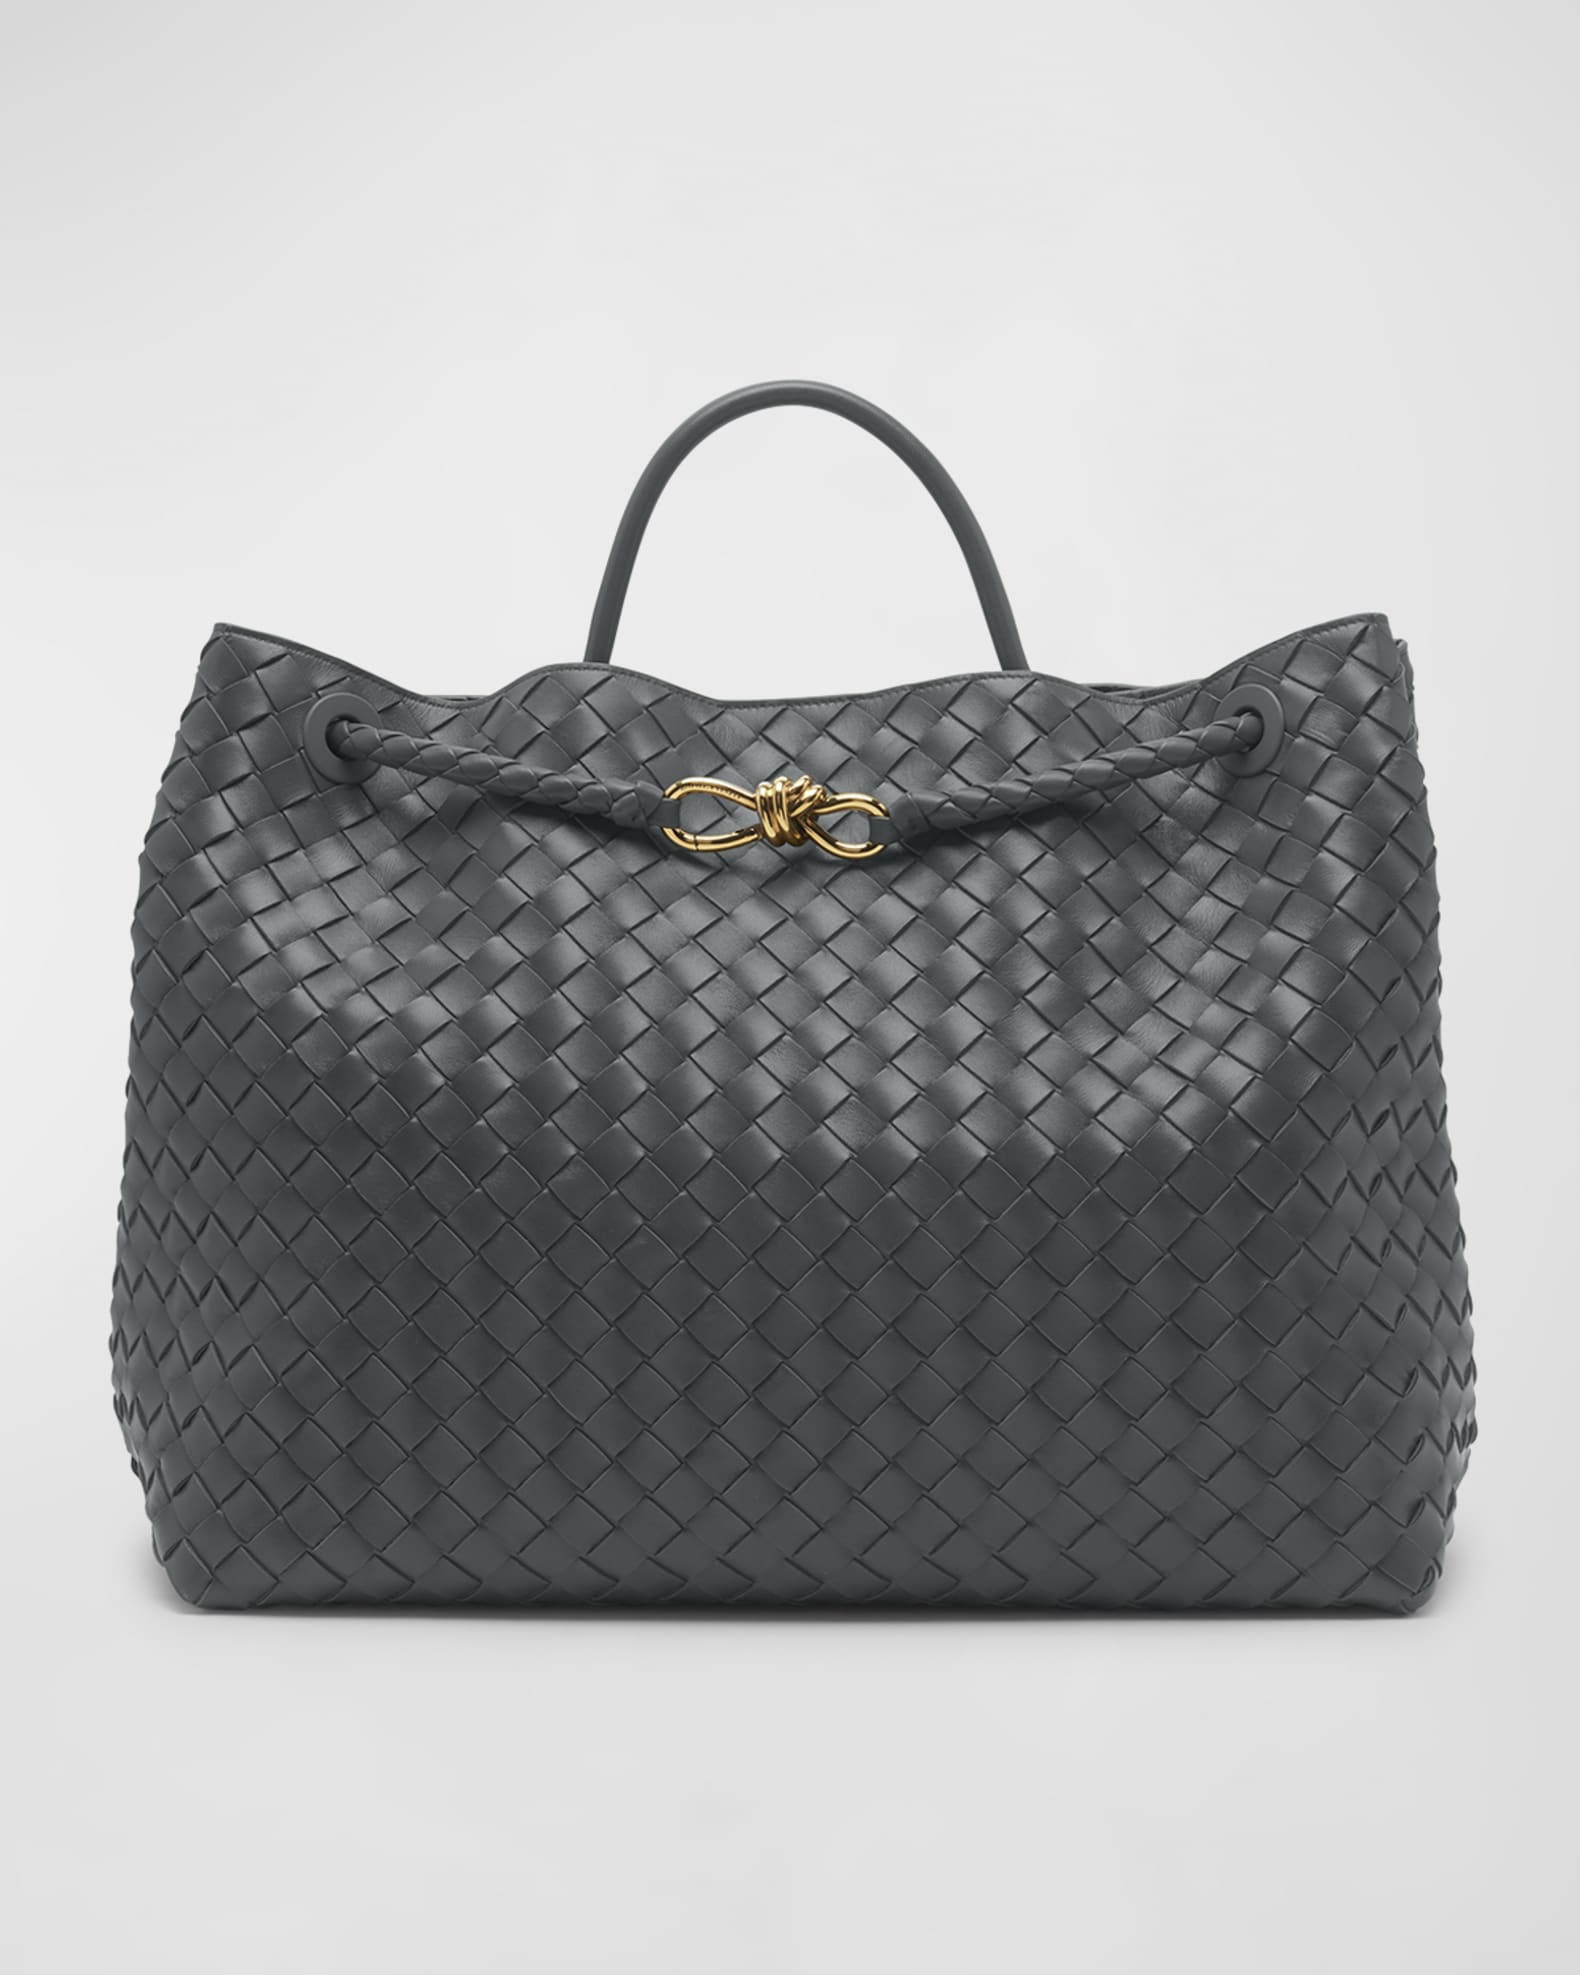 Big Bag Trend: YSL, Chanel, Bottega Veneta & More